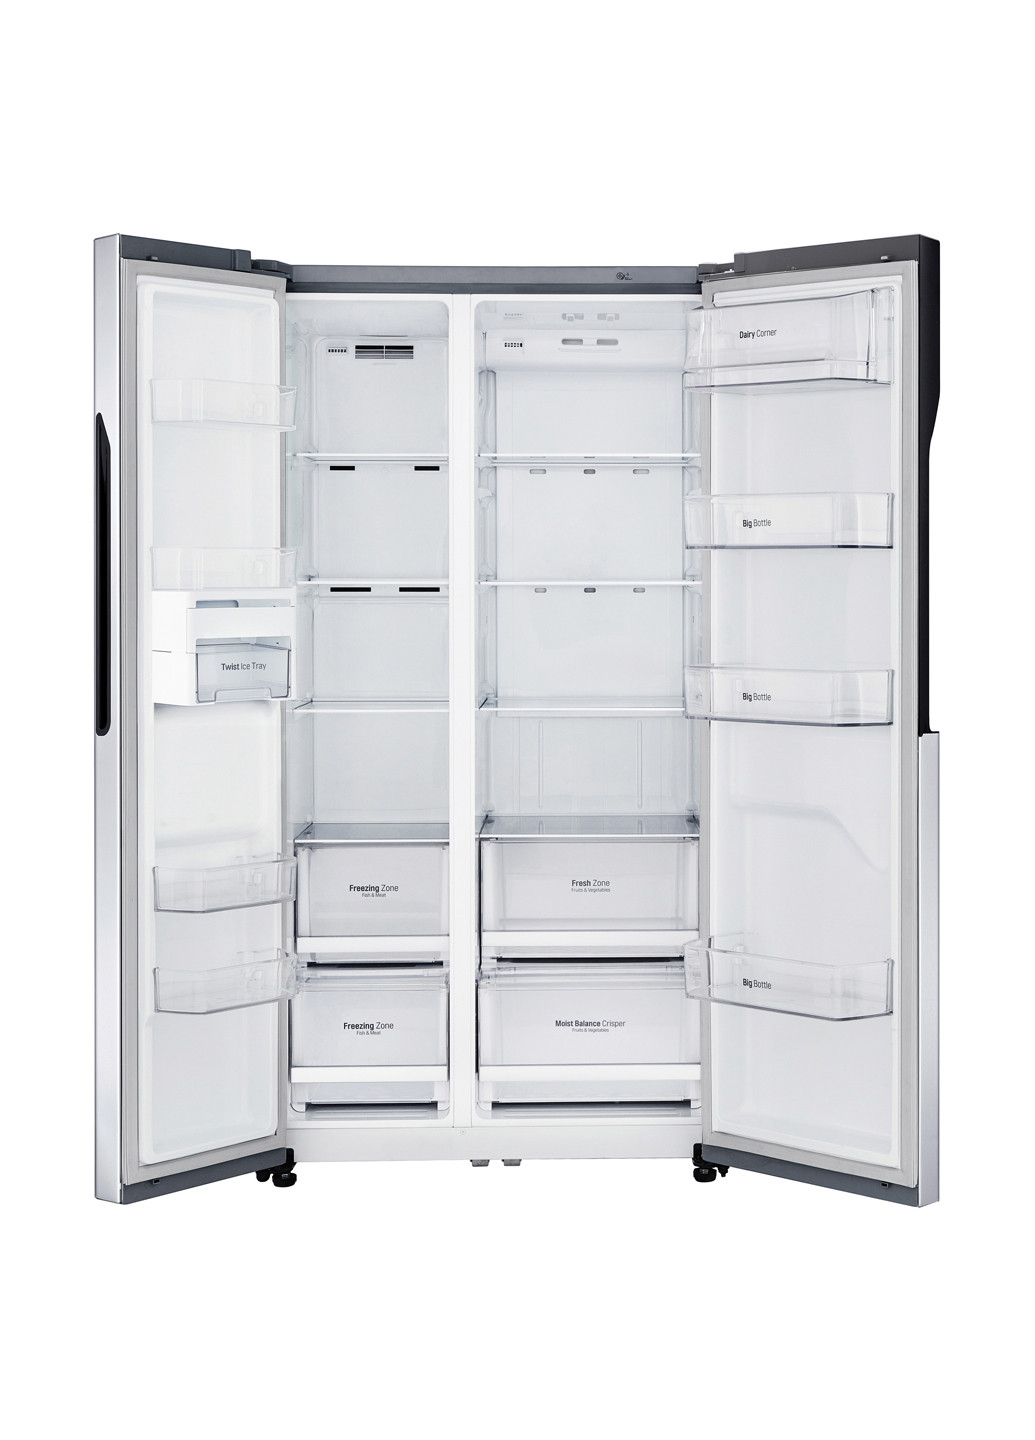 Холодильник side-by-side LG GC-B247JMUV